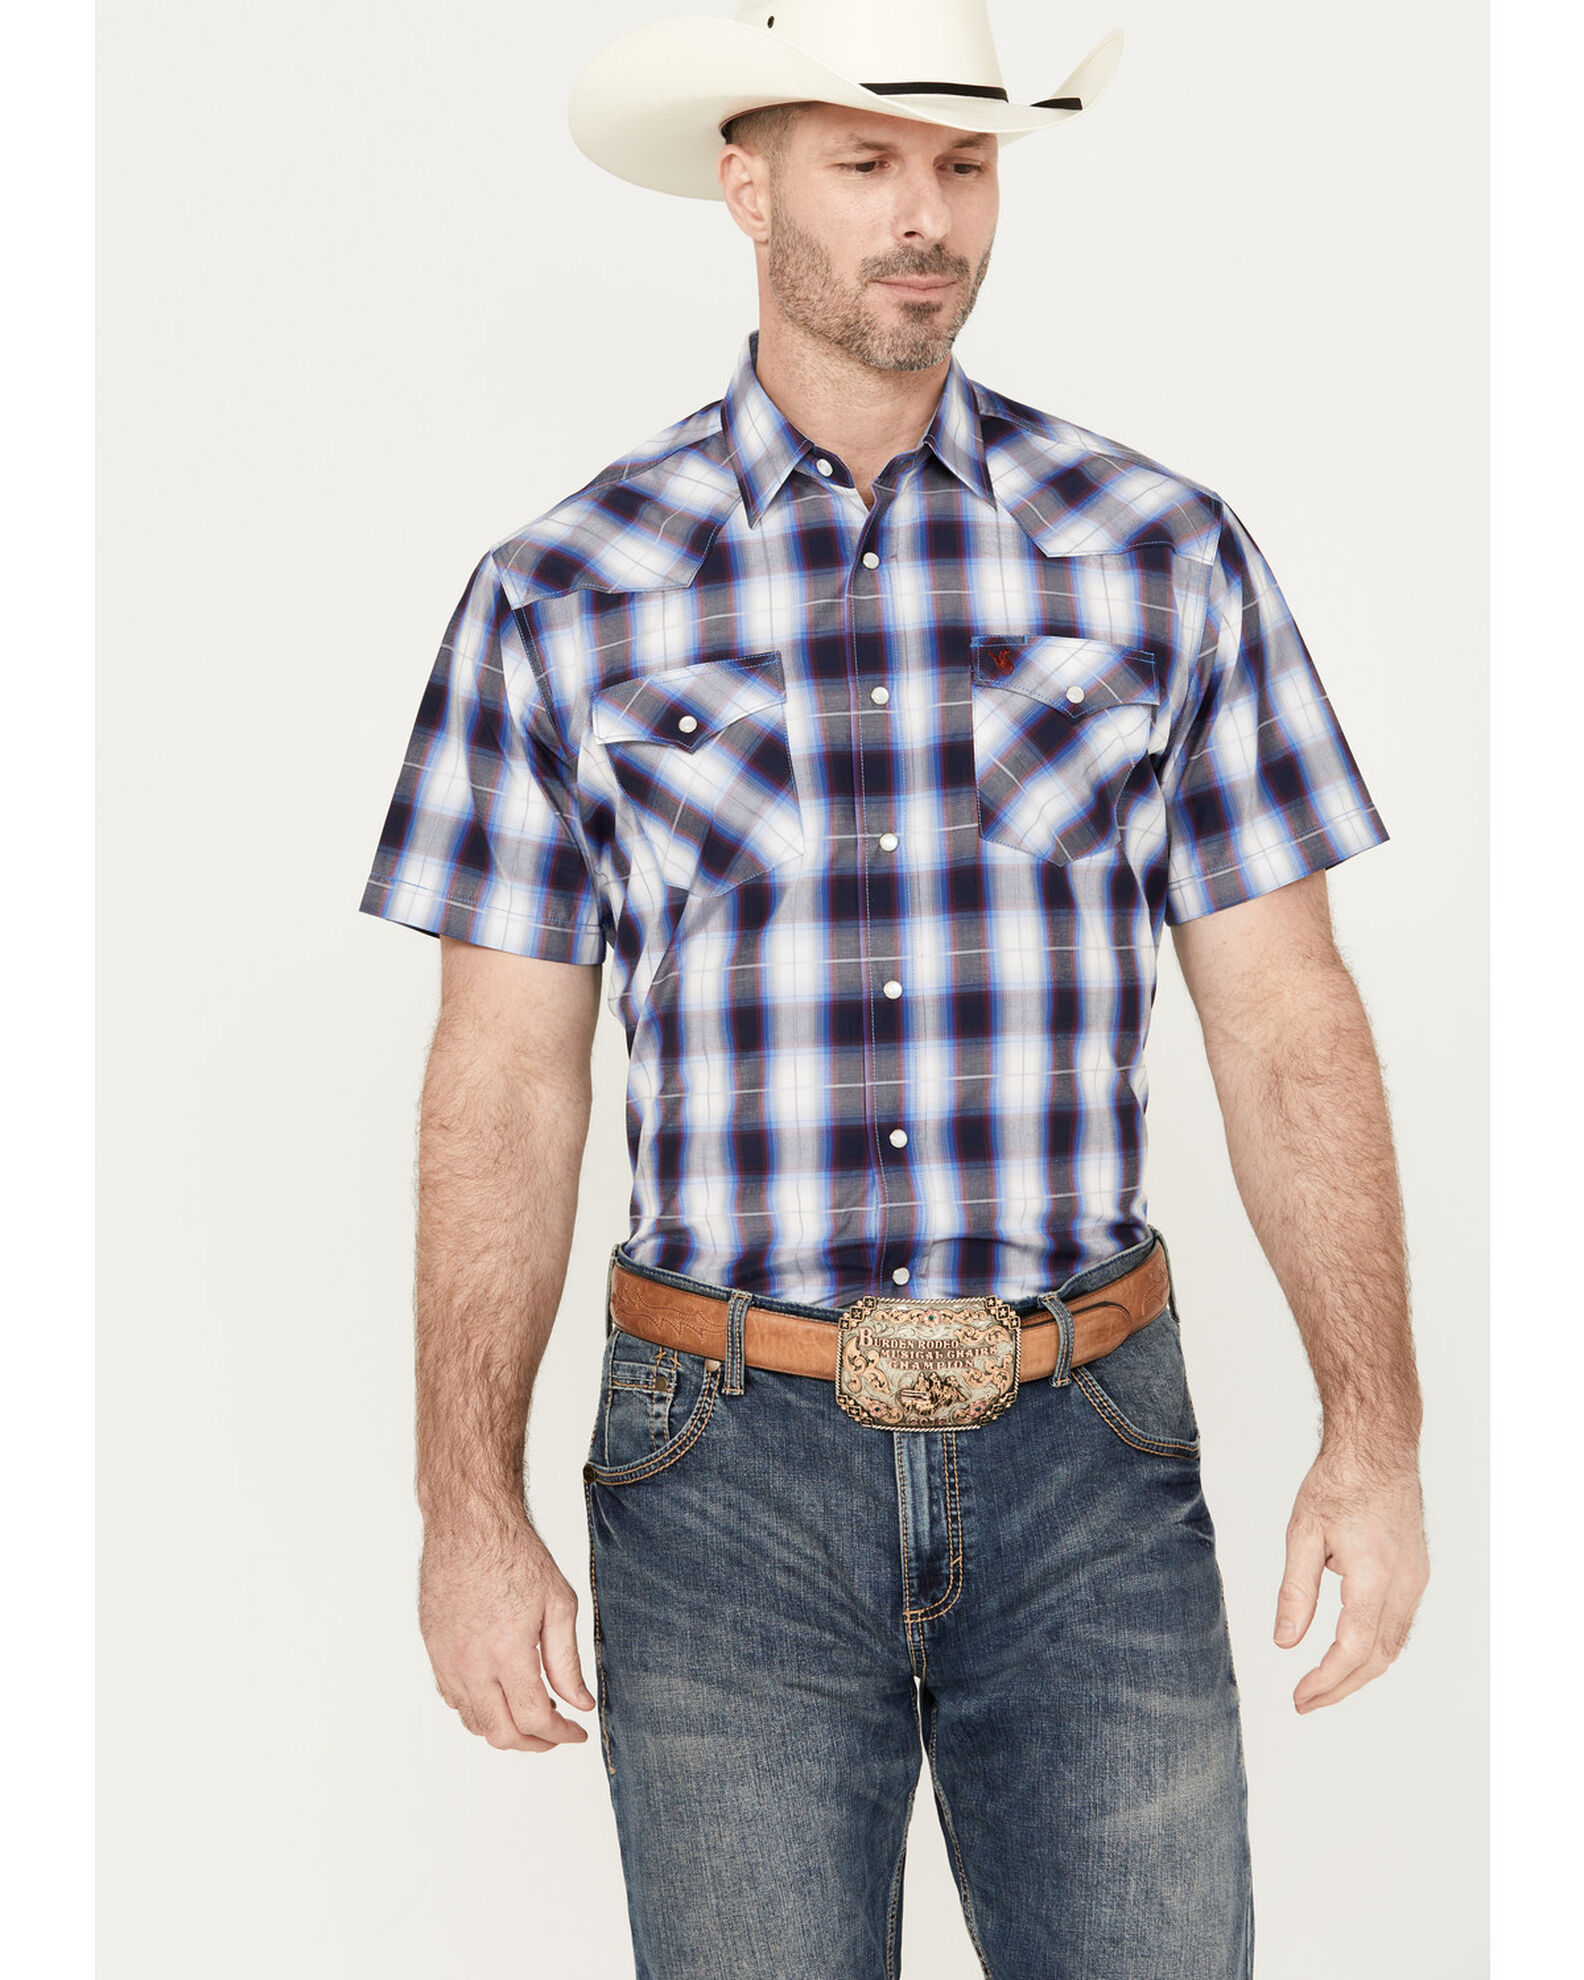 Rodeo Clothing Men's Plaid Print Short Sleeve Snap Western Shirt